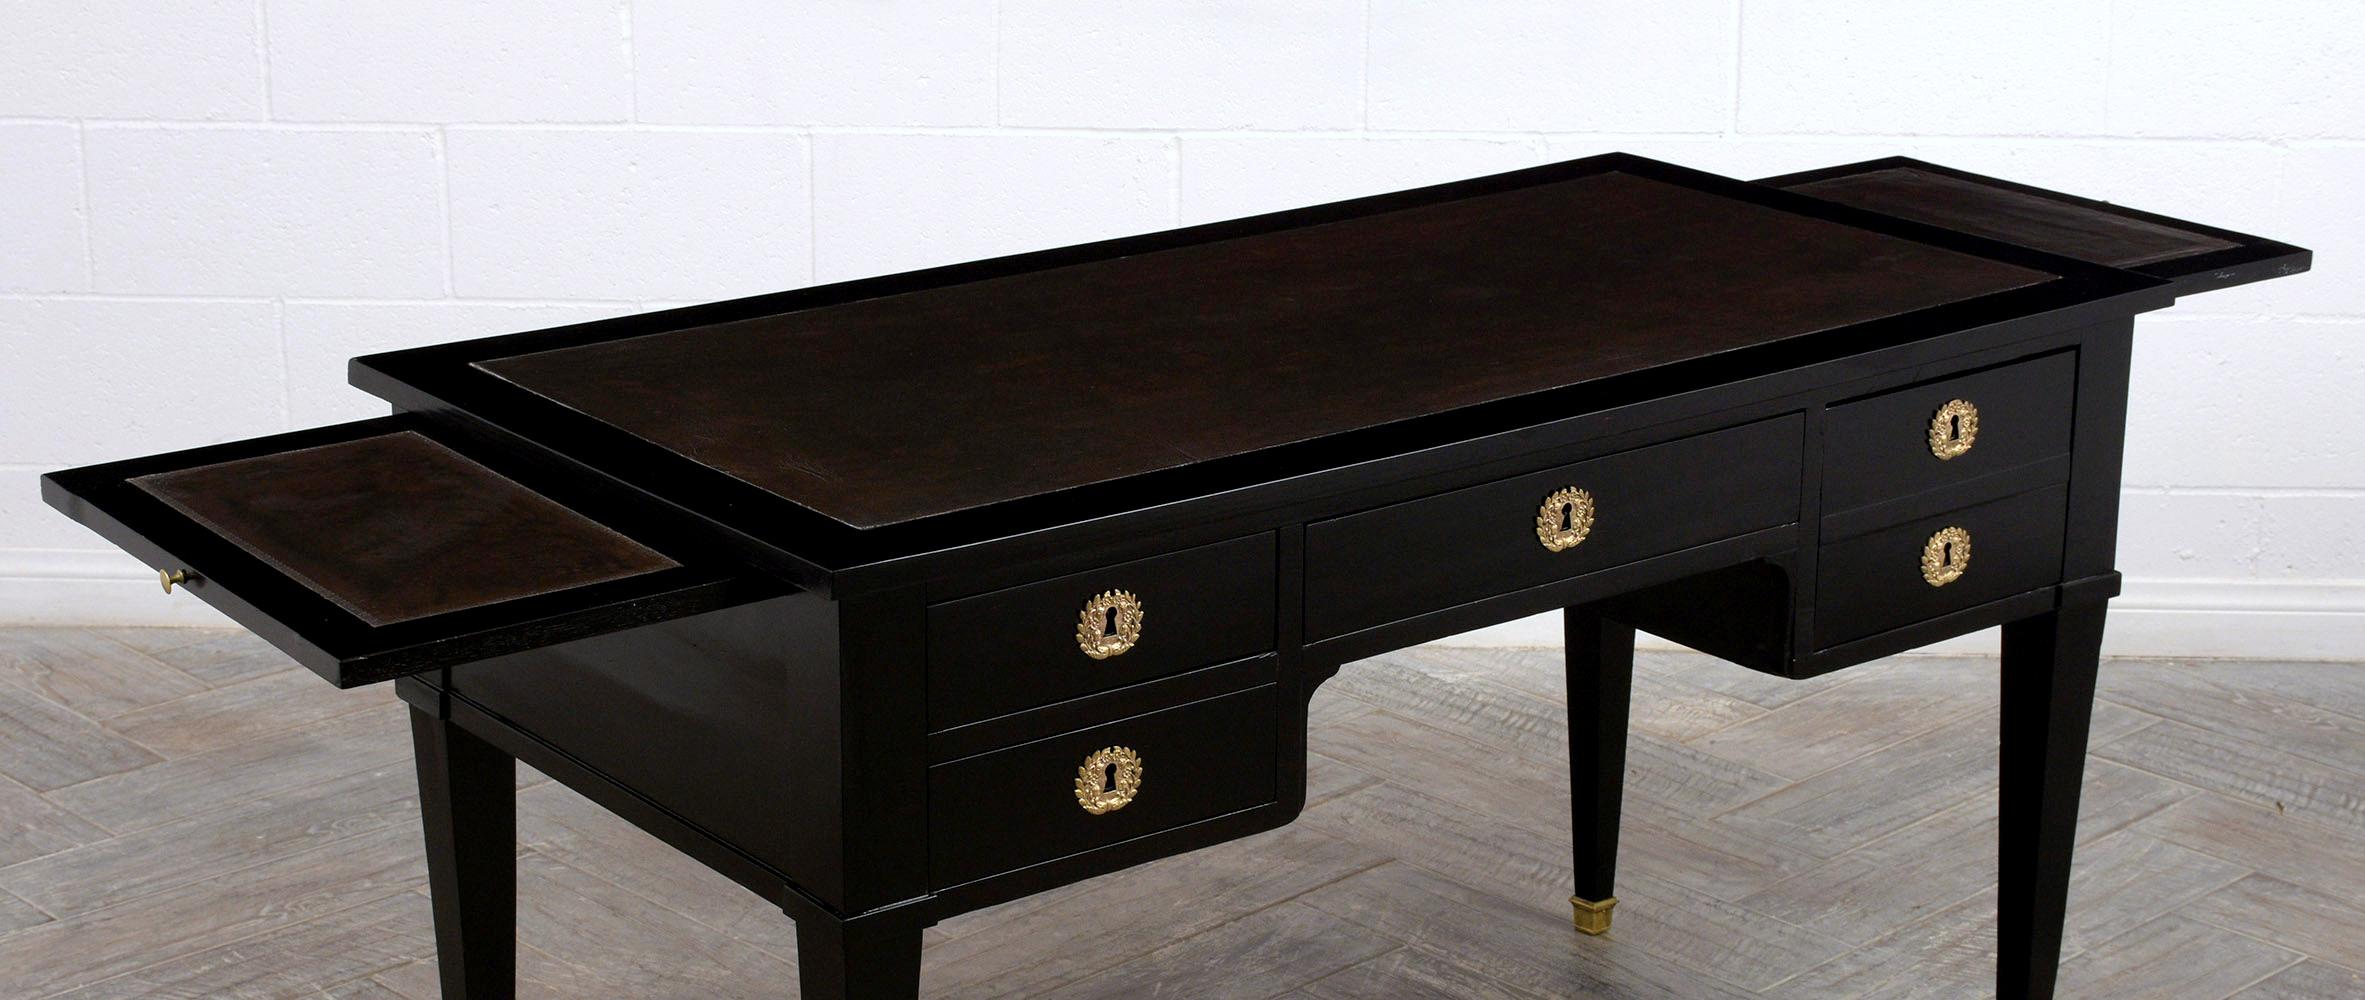 20th Century French Louis XVI-Style Leather Top Ebonized Desk